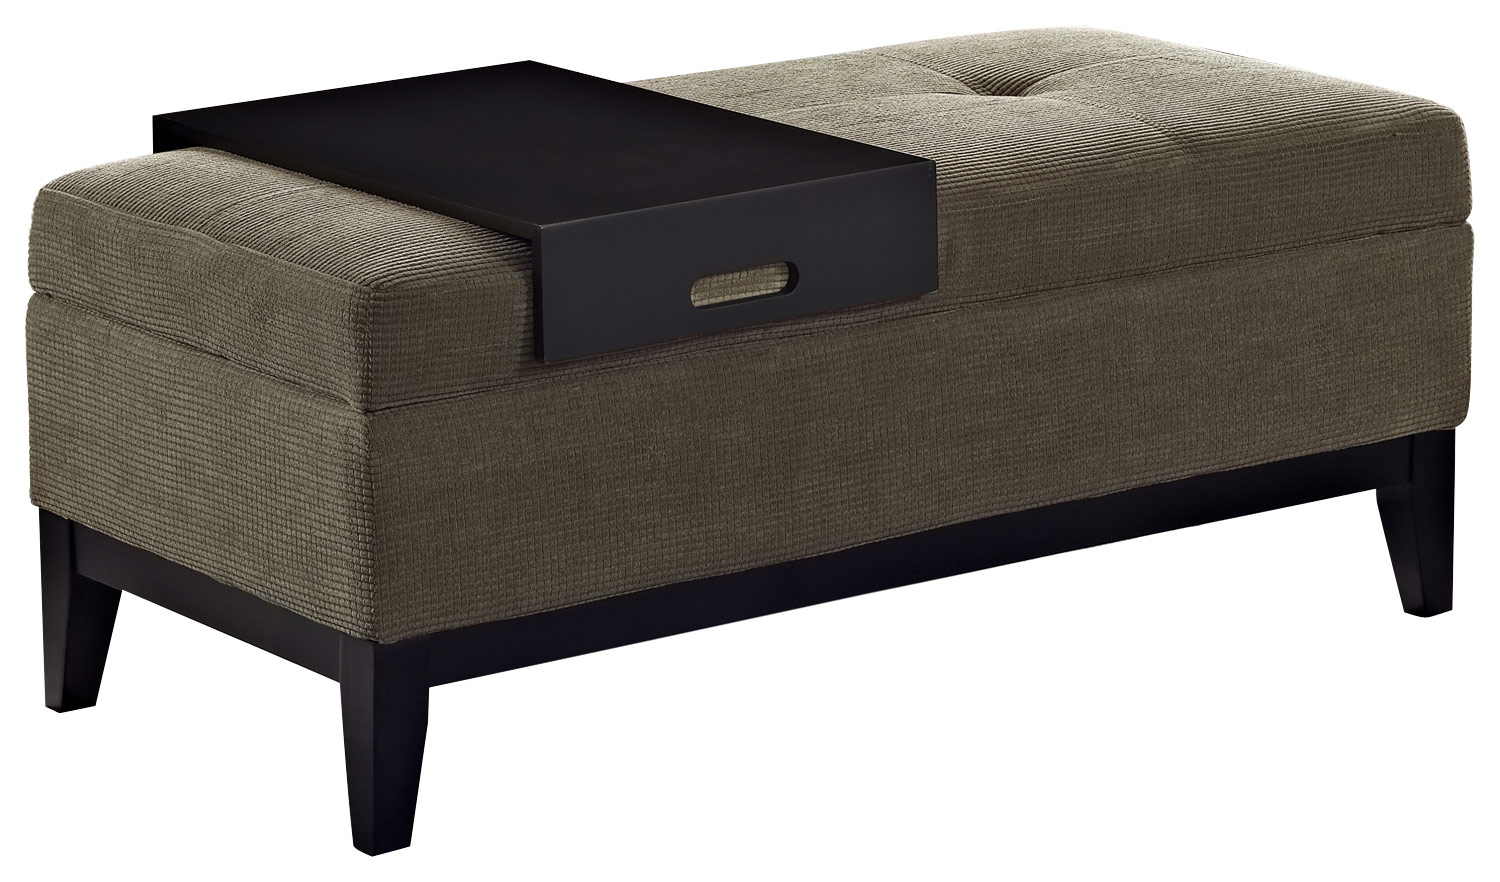 Simpli Home - Oregon Rectangular Fabric Bench Ottoman With Inner Storage - Khaki Beige was $305.99 now $229.99 (25.0% off)